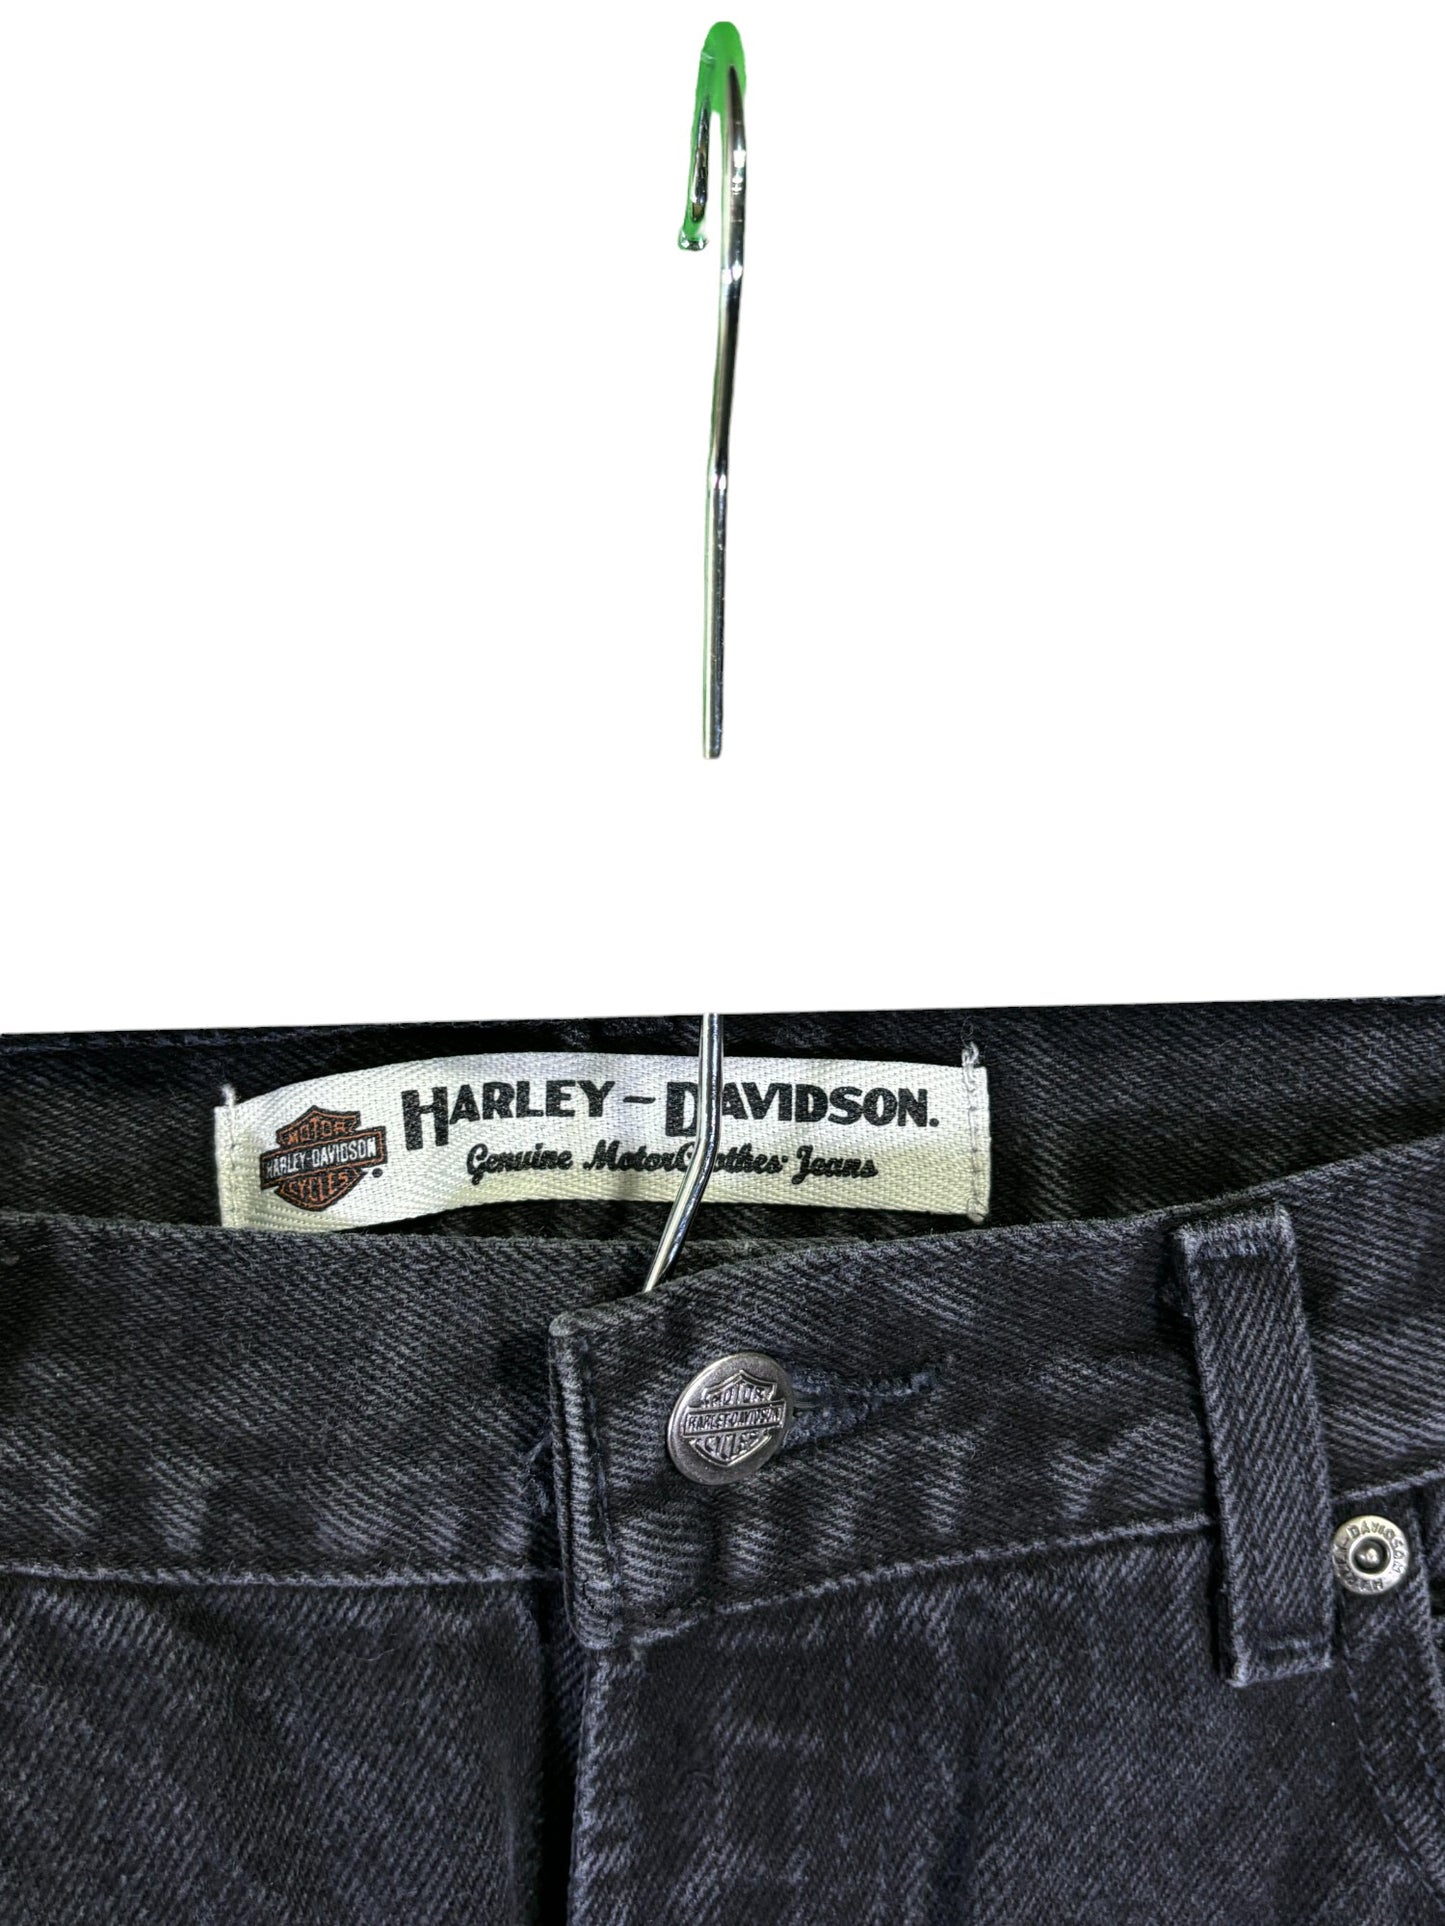 Vintage Harley Davidson Black Denim Straight Leg Jeans Size 34x34